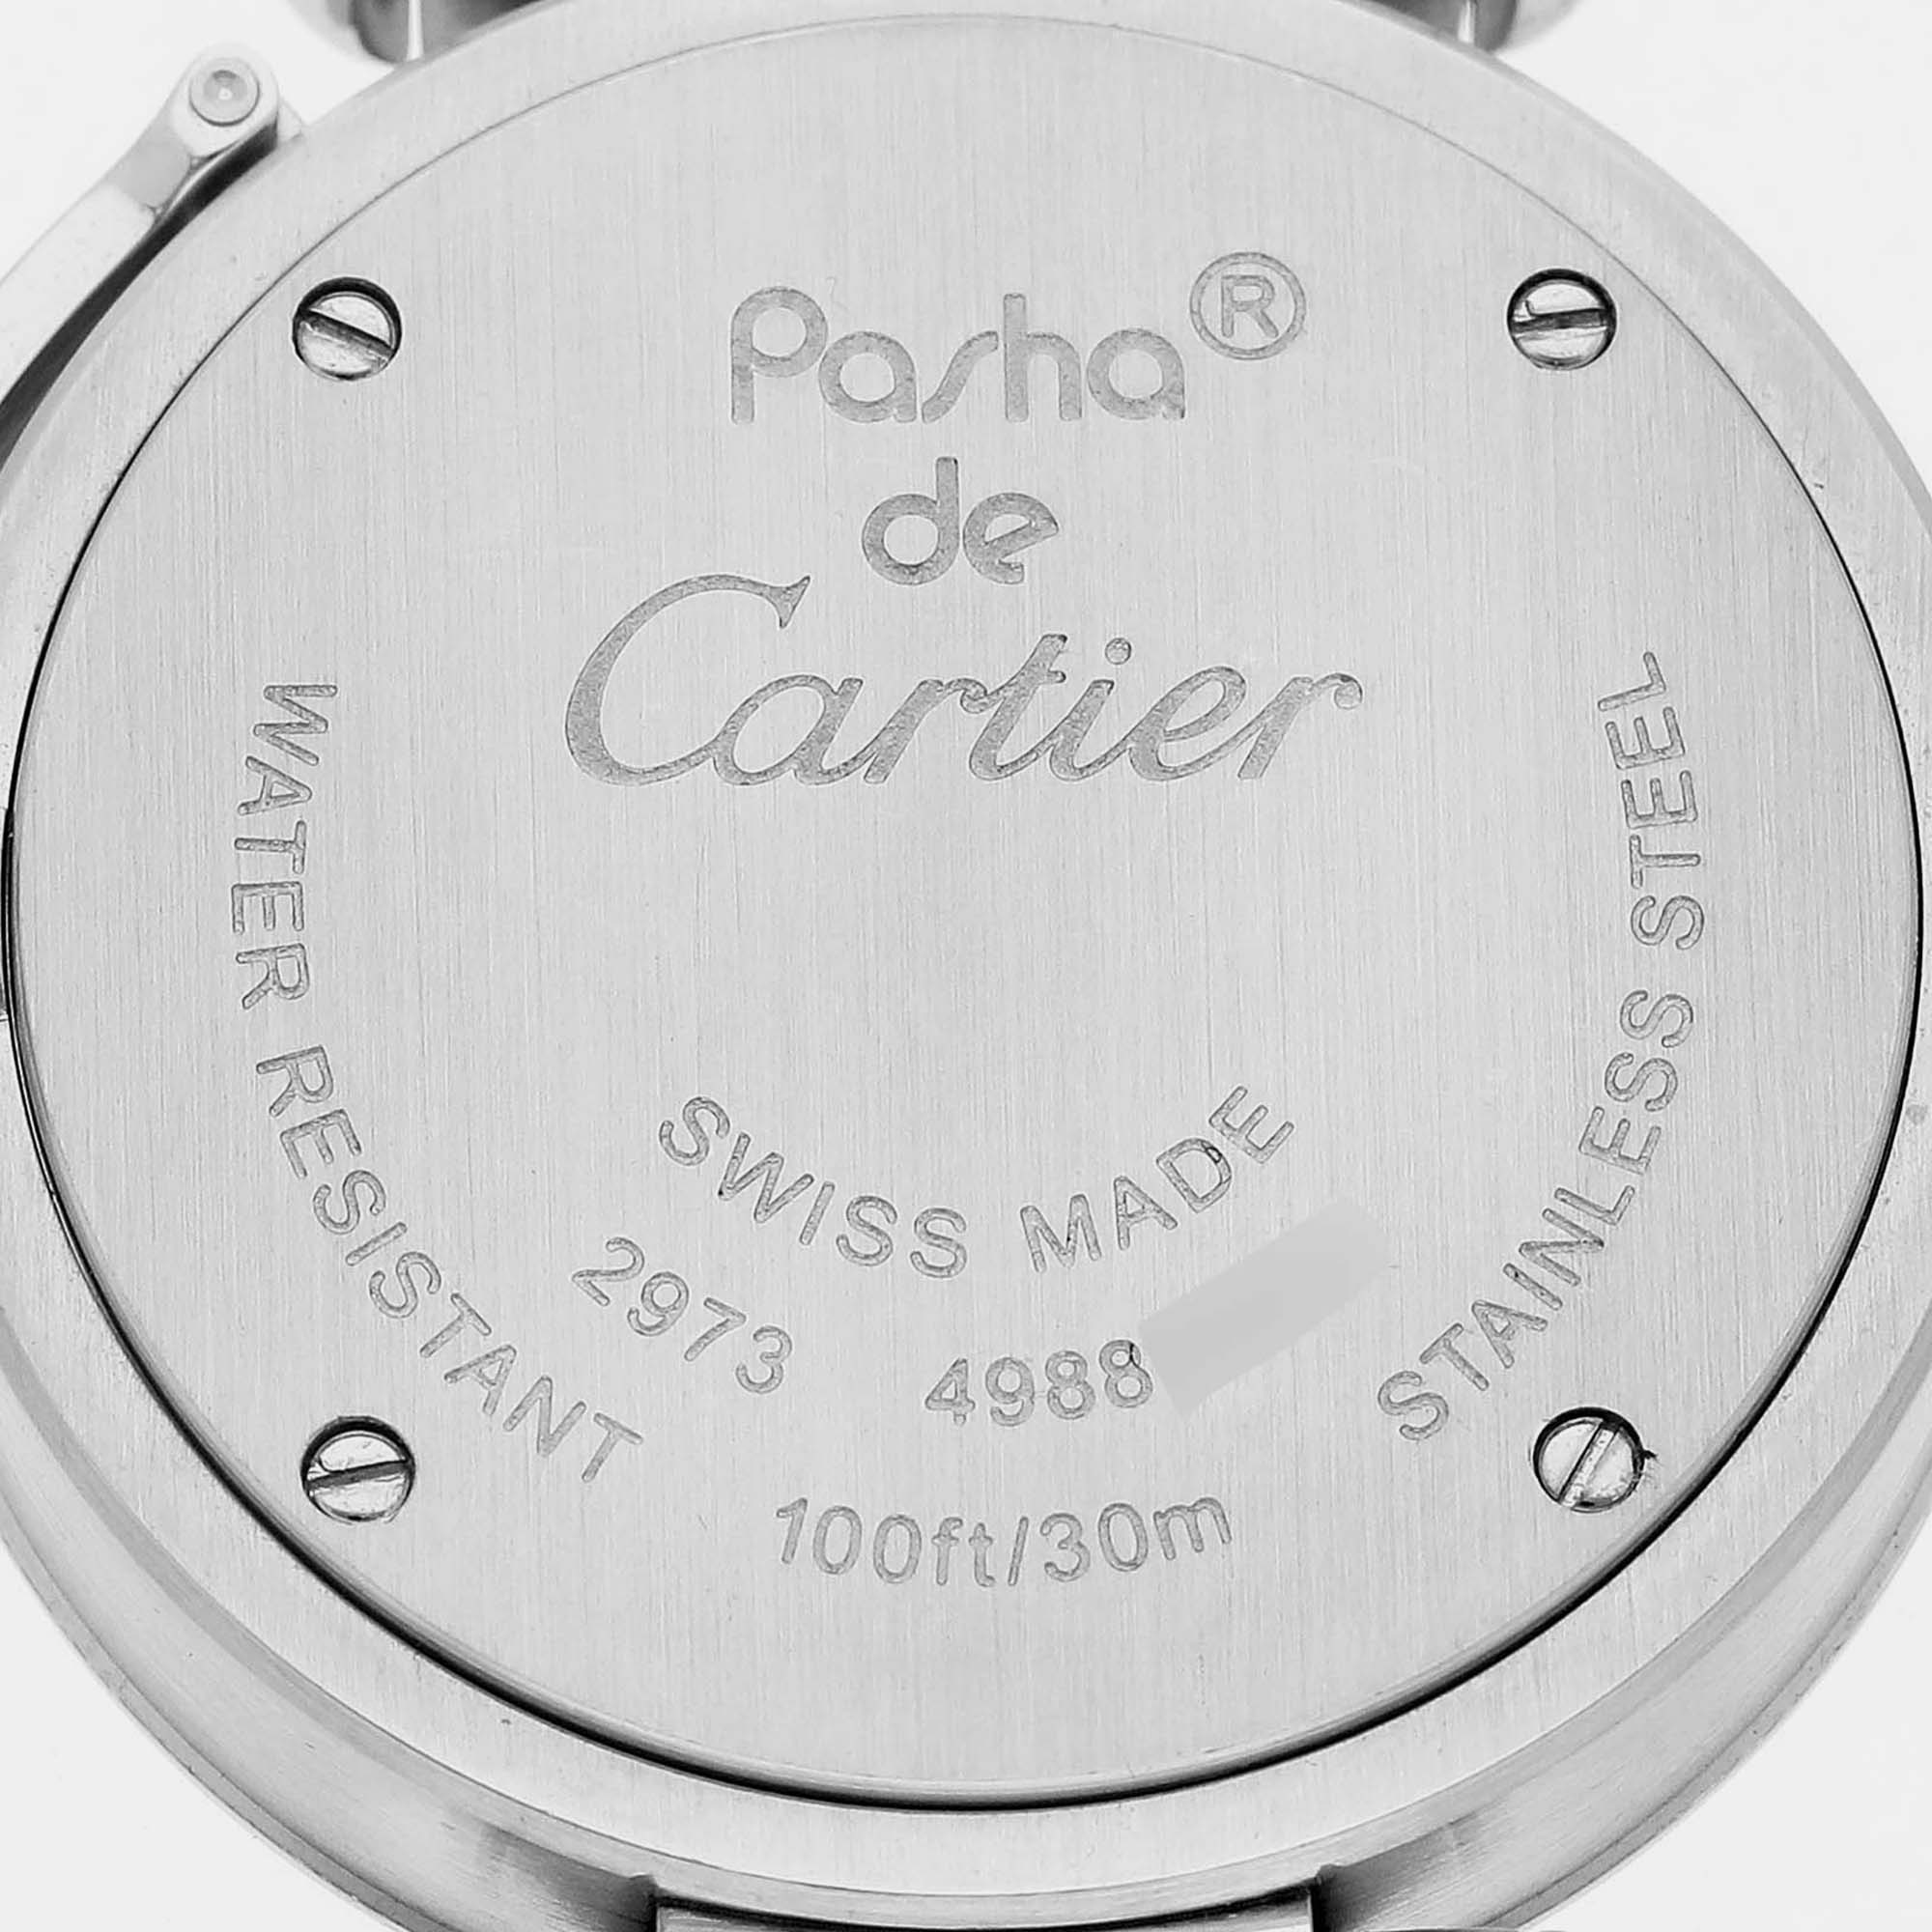 Cartier Miss Pasha Steel Pink Dial Ladies Watch W3140008 27 Mm